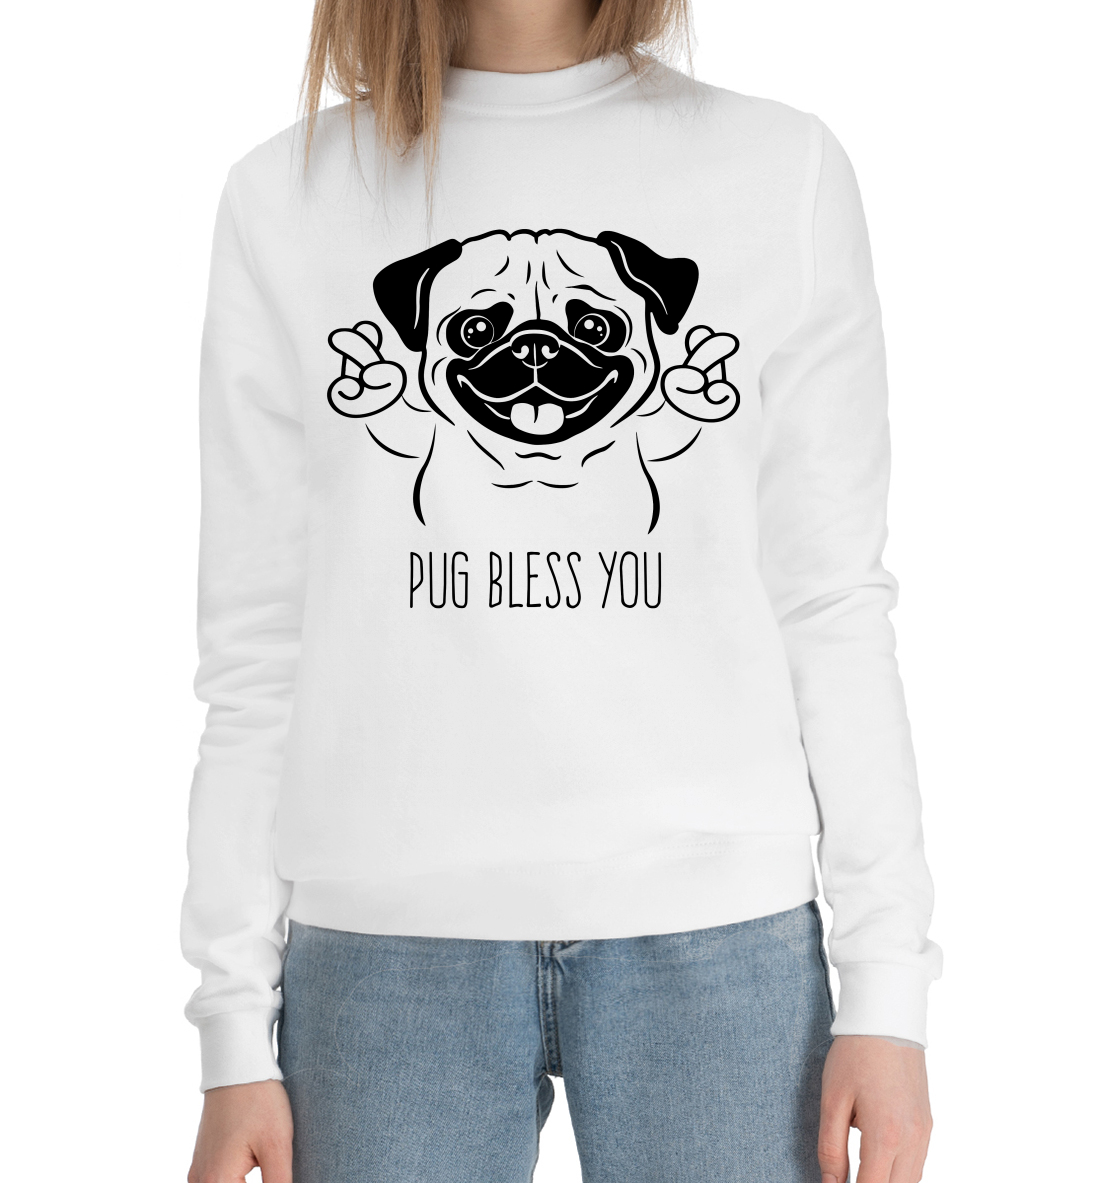 Pug bless you pug bless you